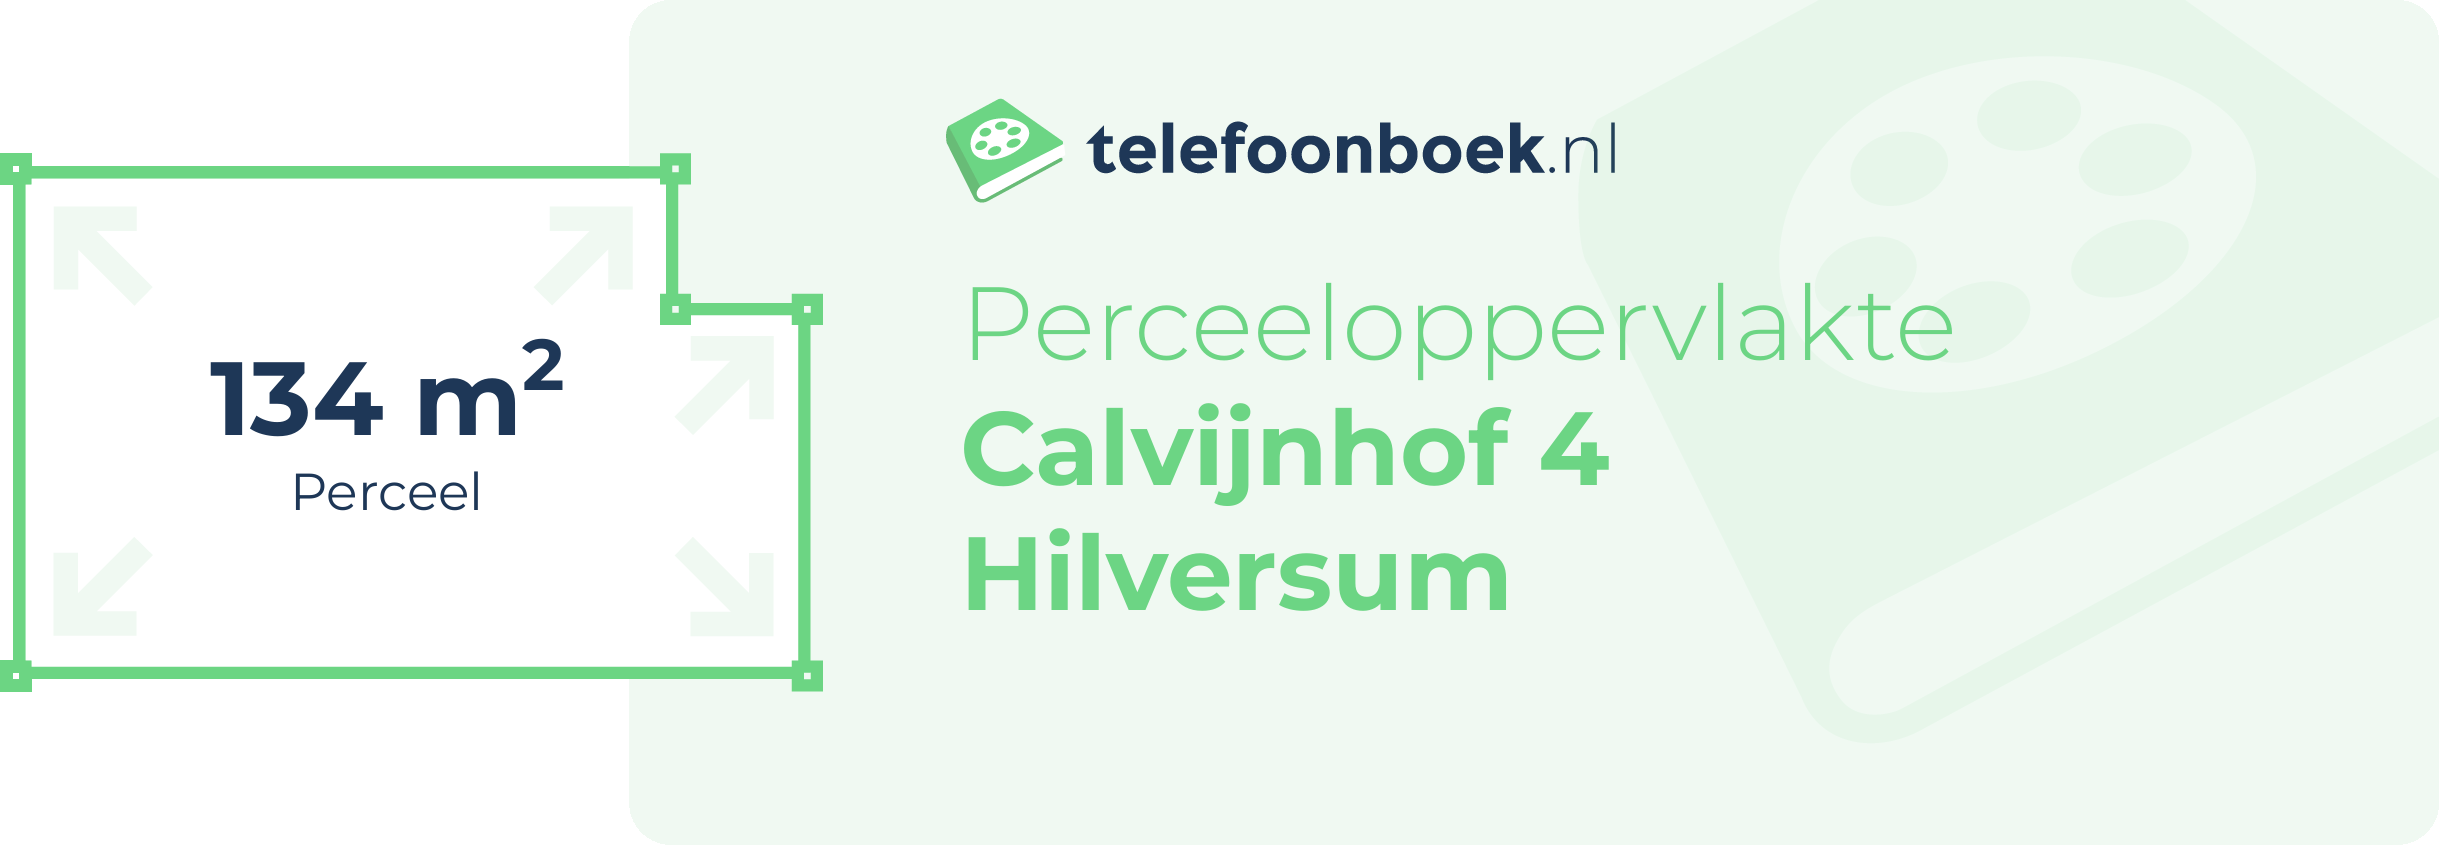 Perceeloppervlakte Calvijnhof 4 Hilversum